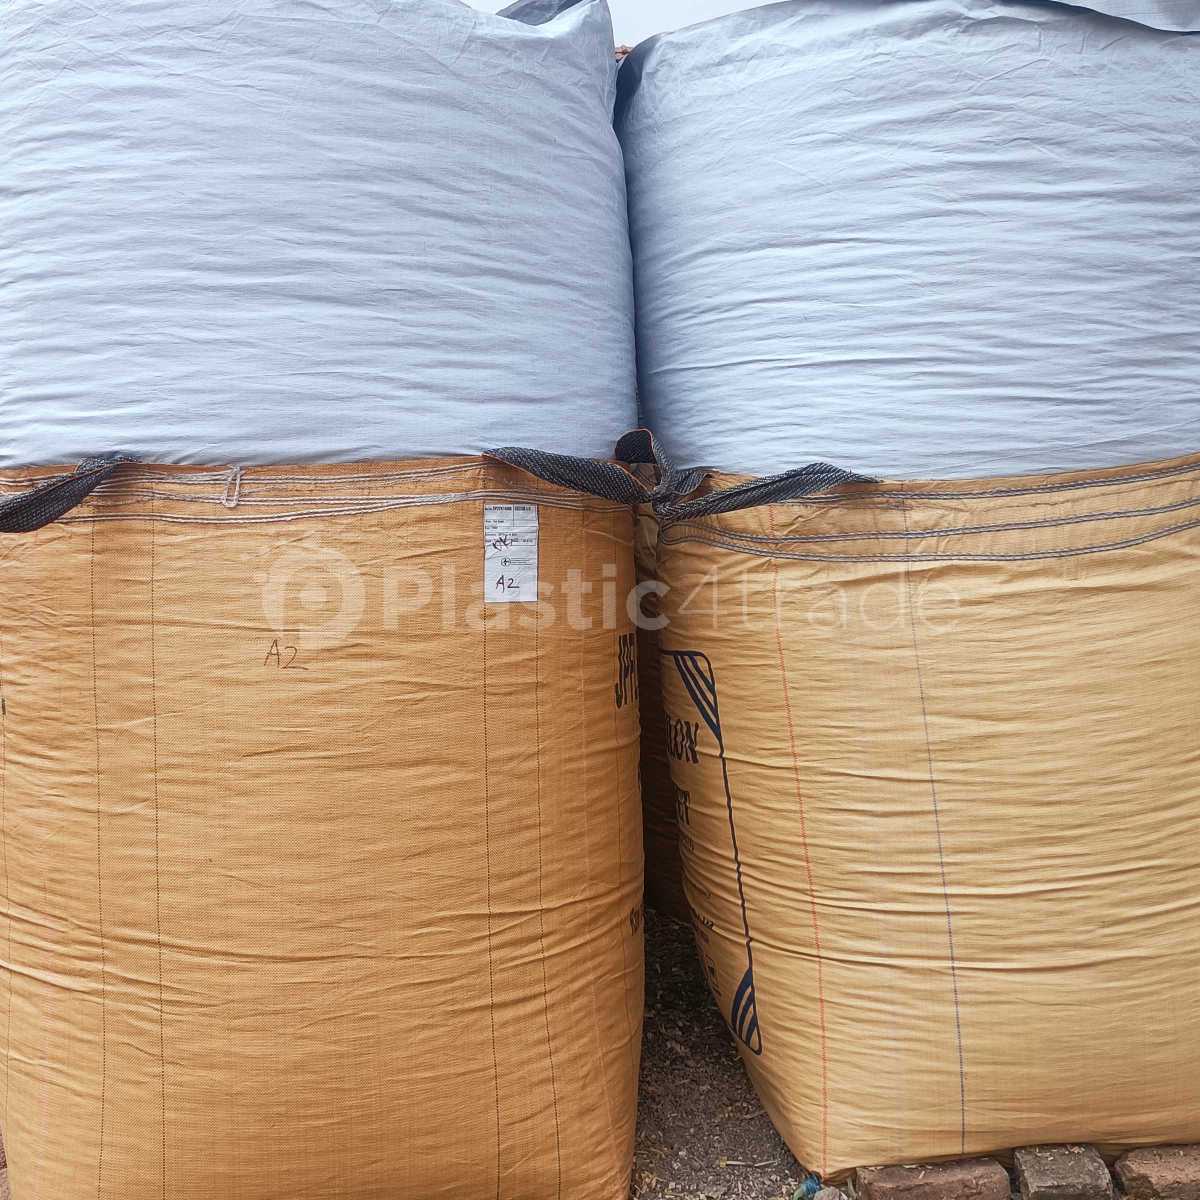 FIBC JUMBO BAGS HDPE Stock Lots RAFFIA maharashtra india Plastic4trade